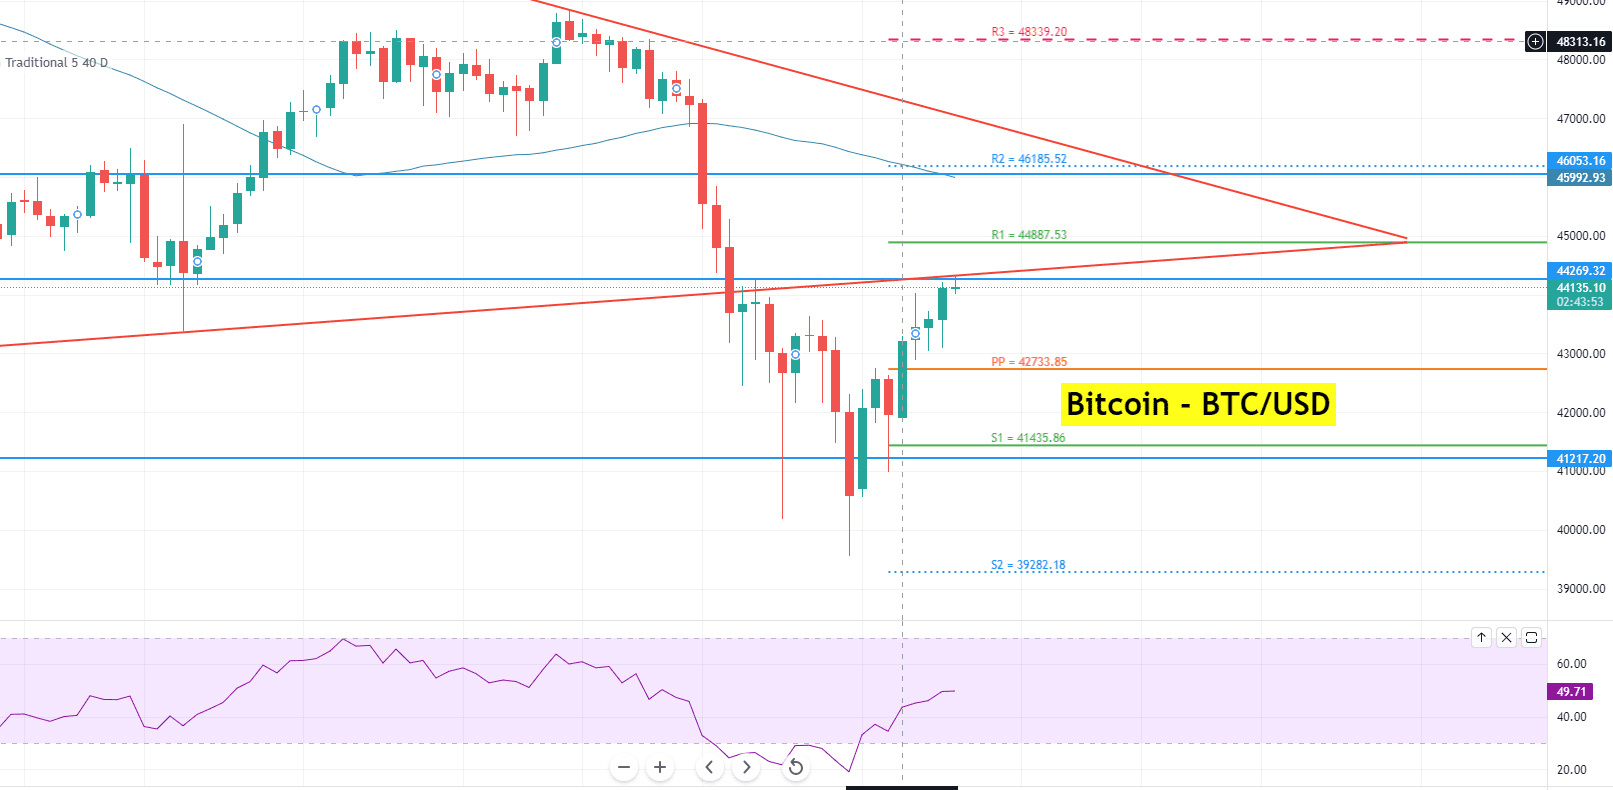 Bitcoin - BTC/USD Chart